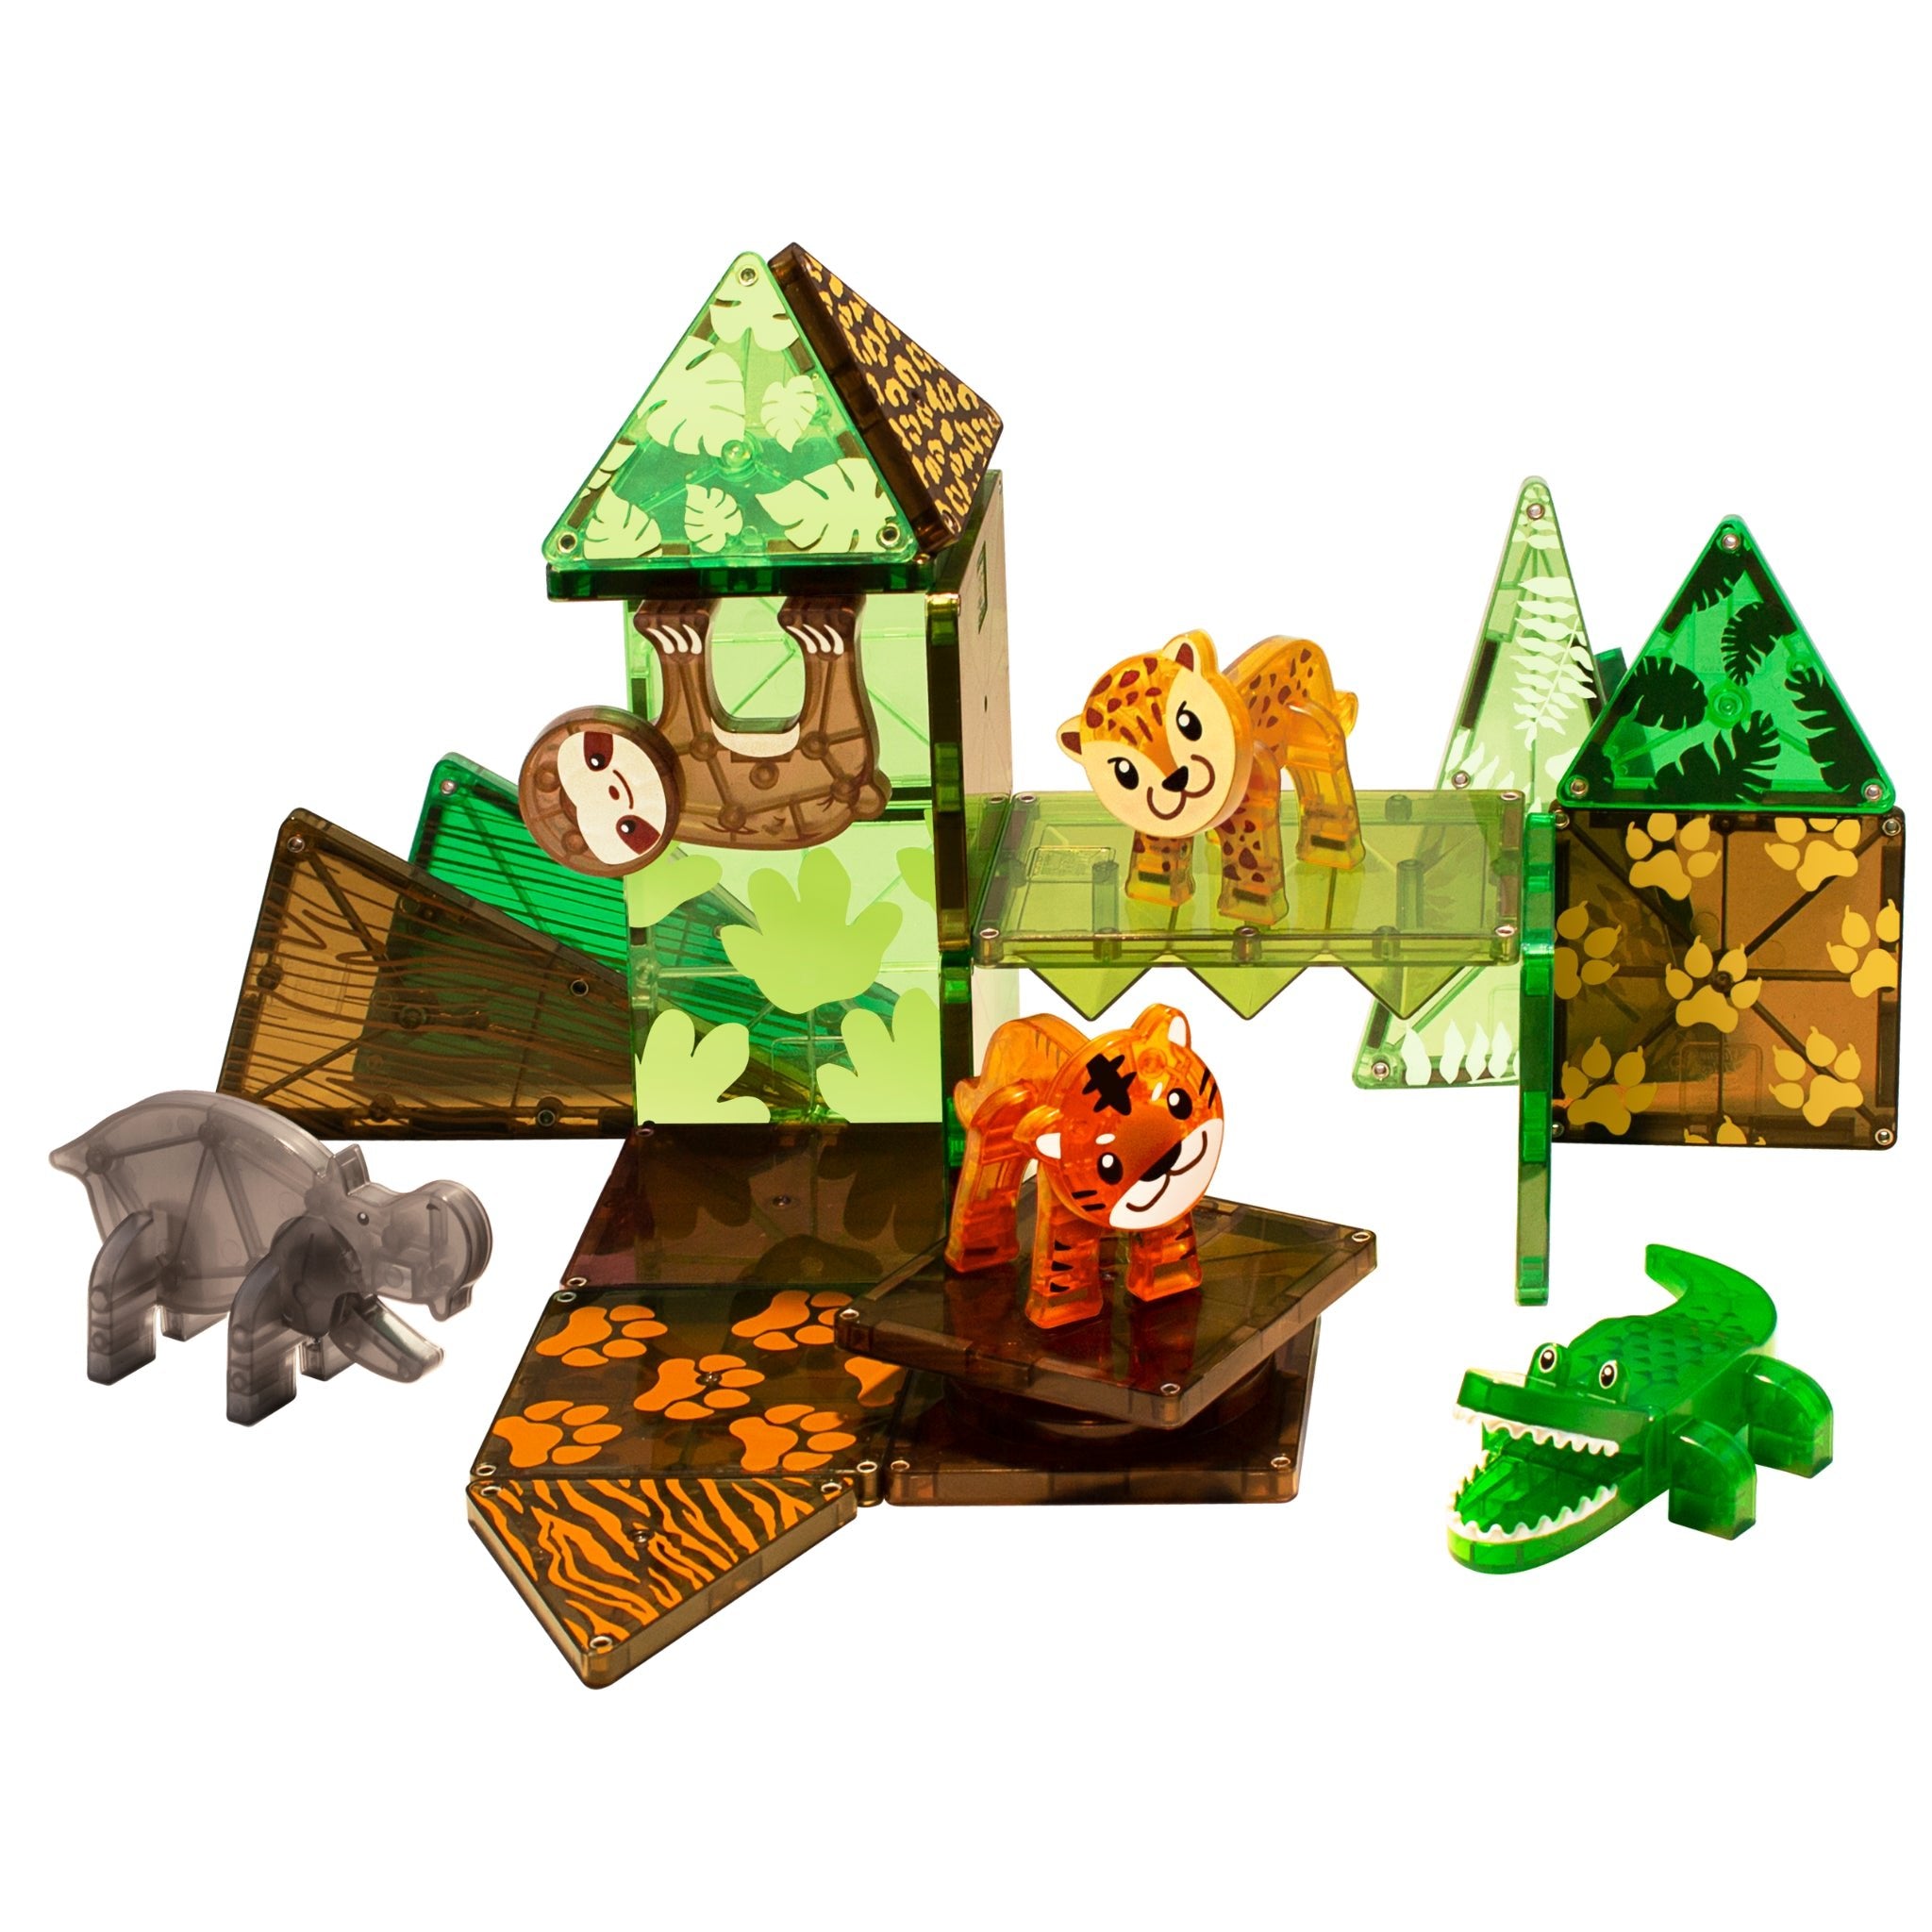 Magna-Tiles Jungle Animals, 25-Piece Set - ANB Baby -850025176033$20 - $50